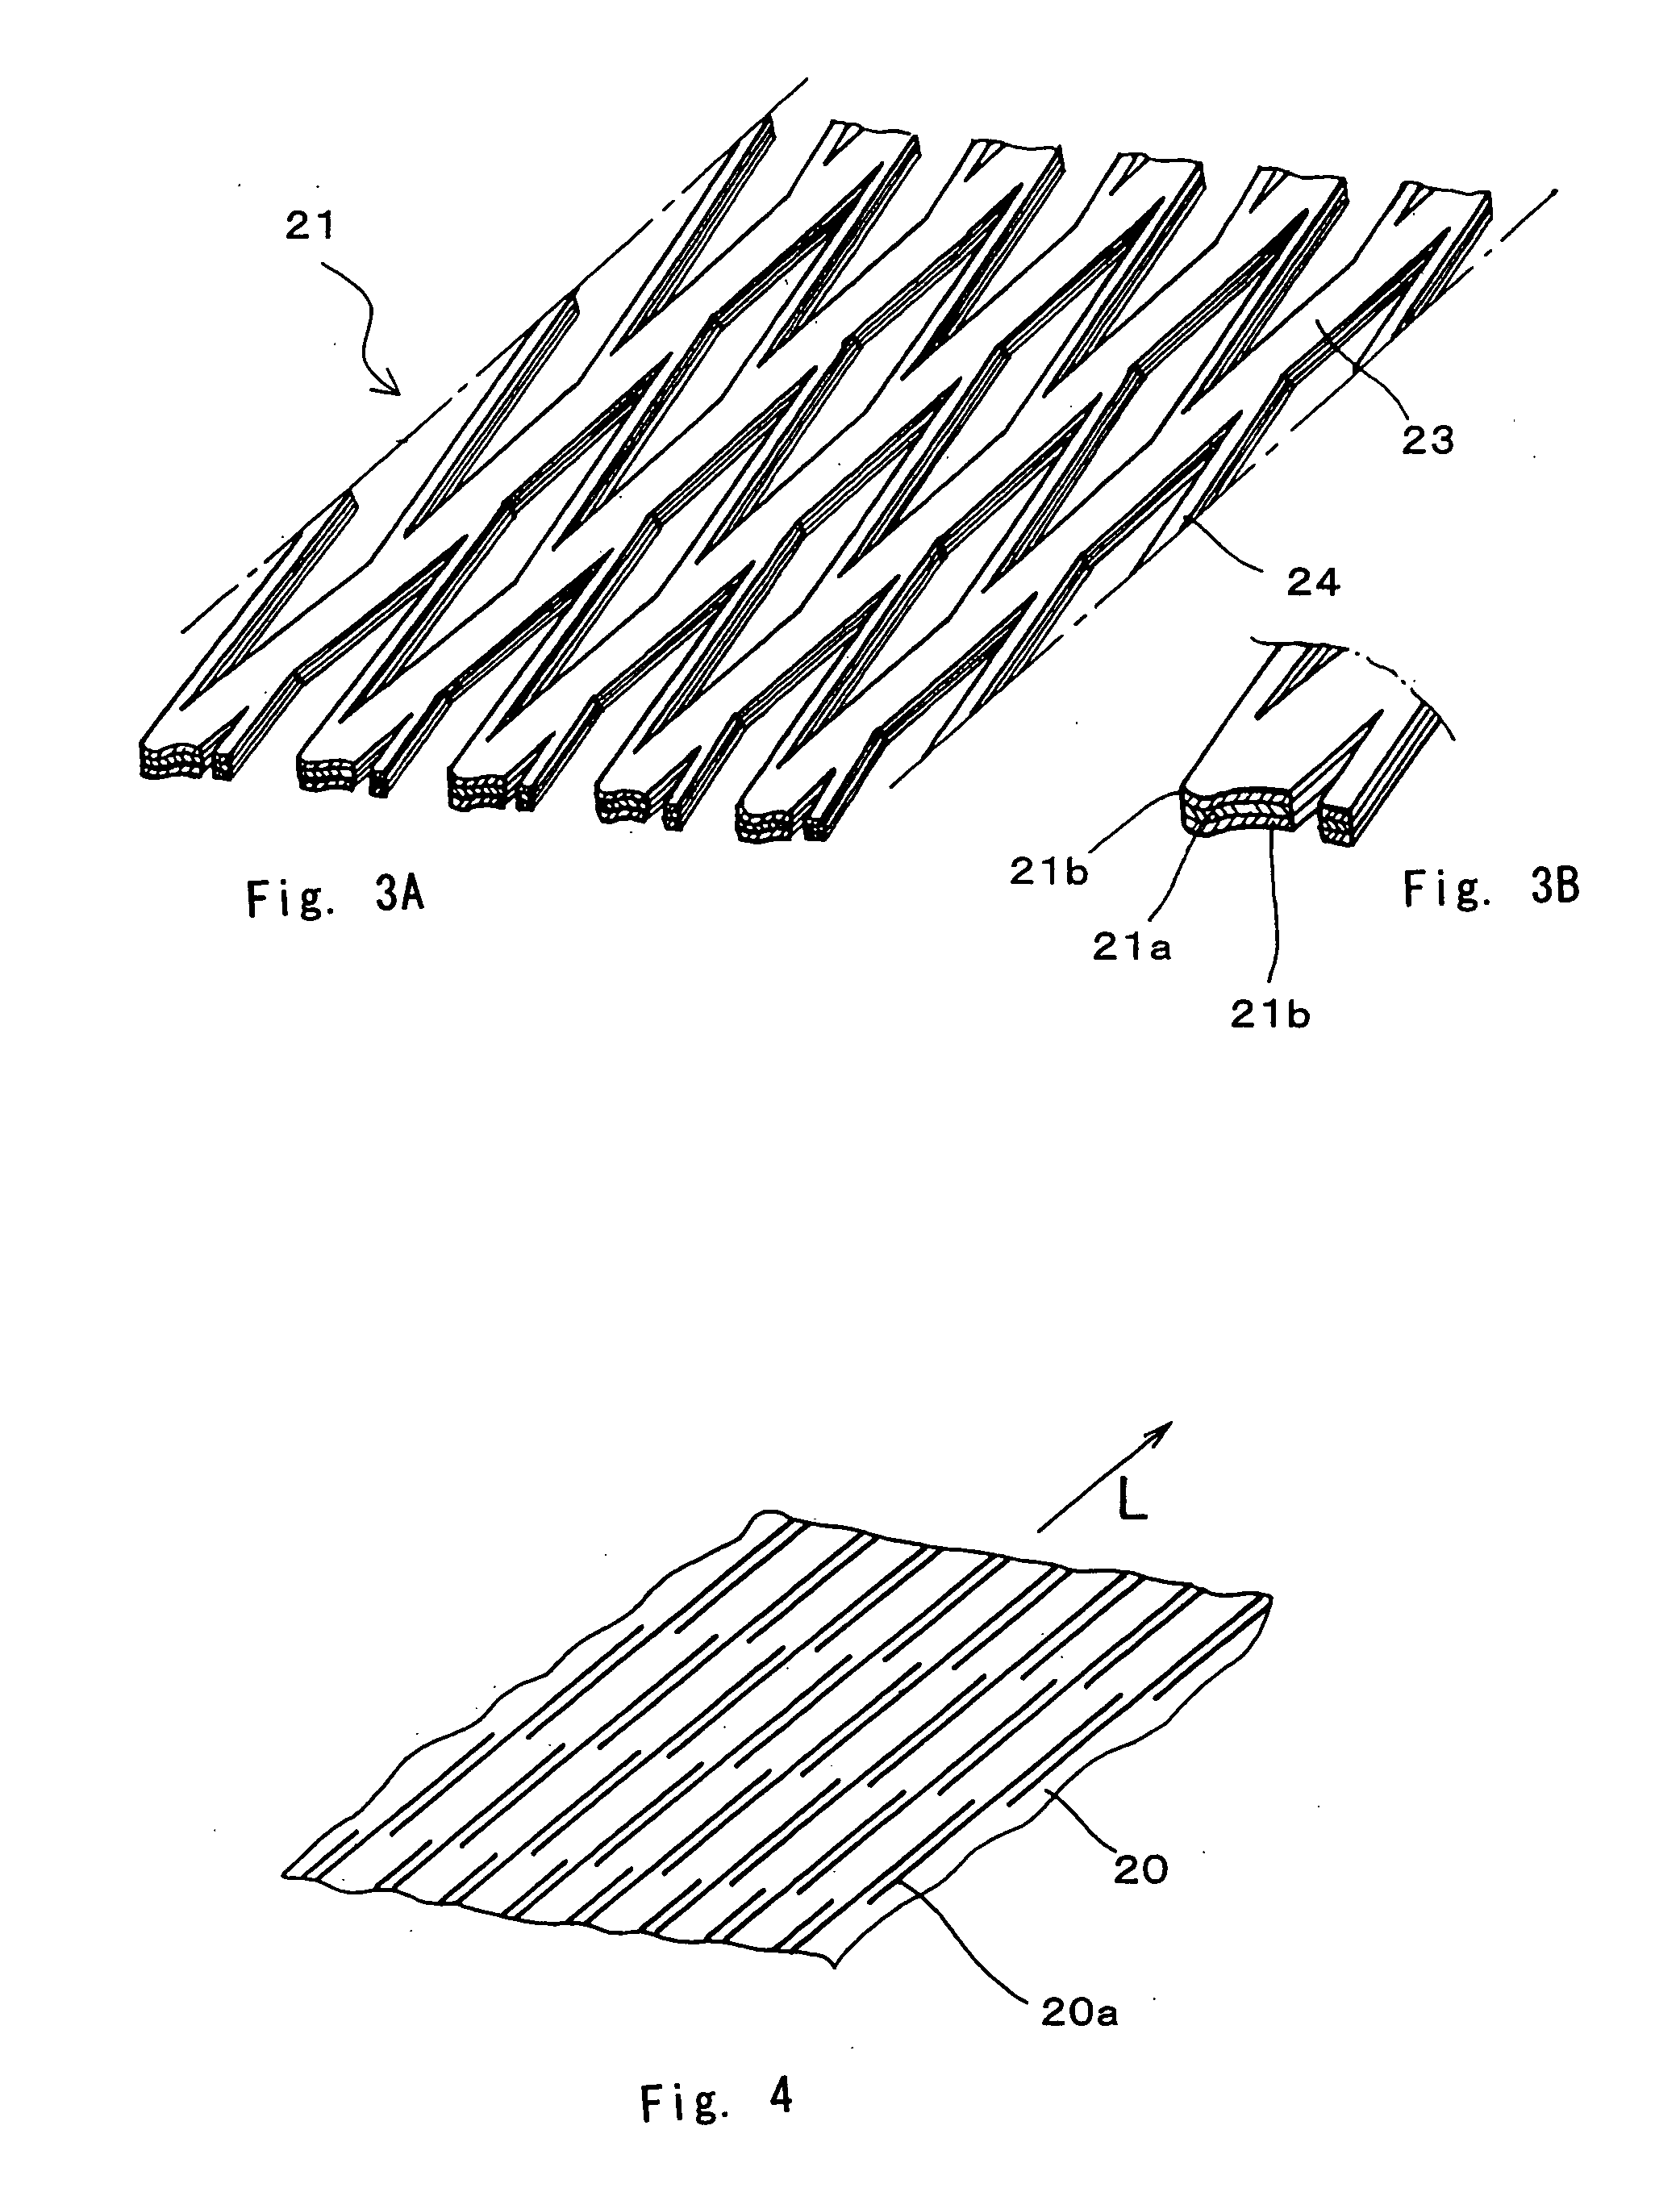 Laminate sheet having reinforcement film and method of manufacturing the same